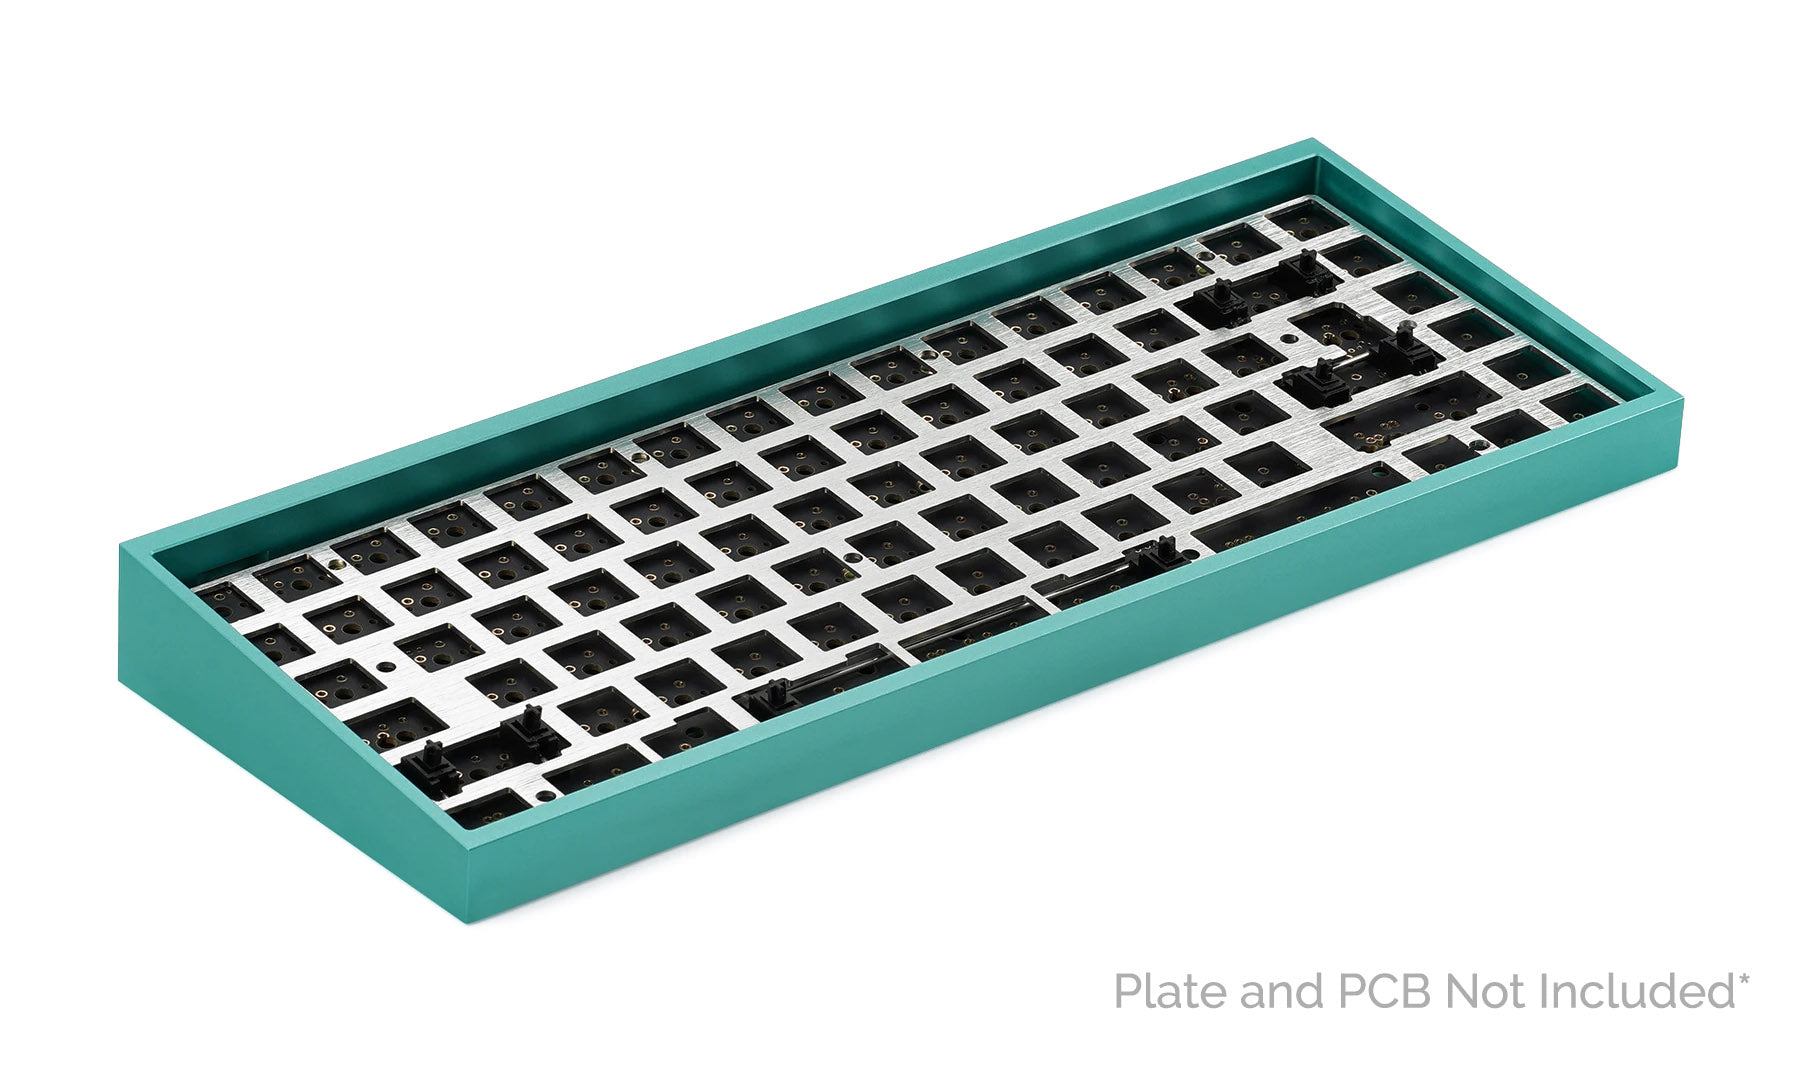 KBDFans Tofu 84 Aluminum Mechanical Keyboard Case MKEUD89PJ0 |42833|